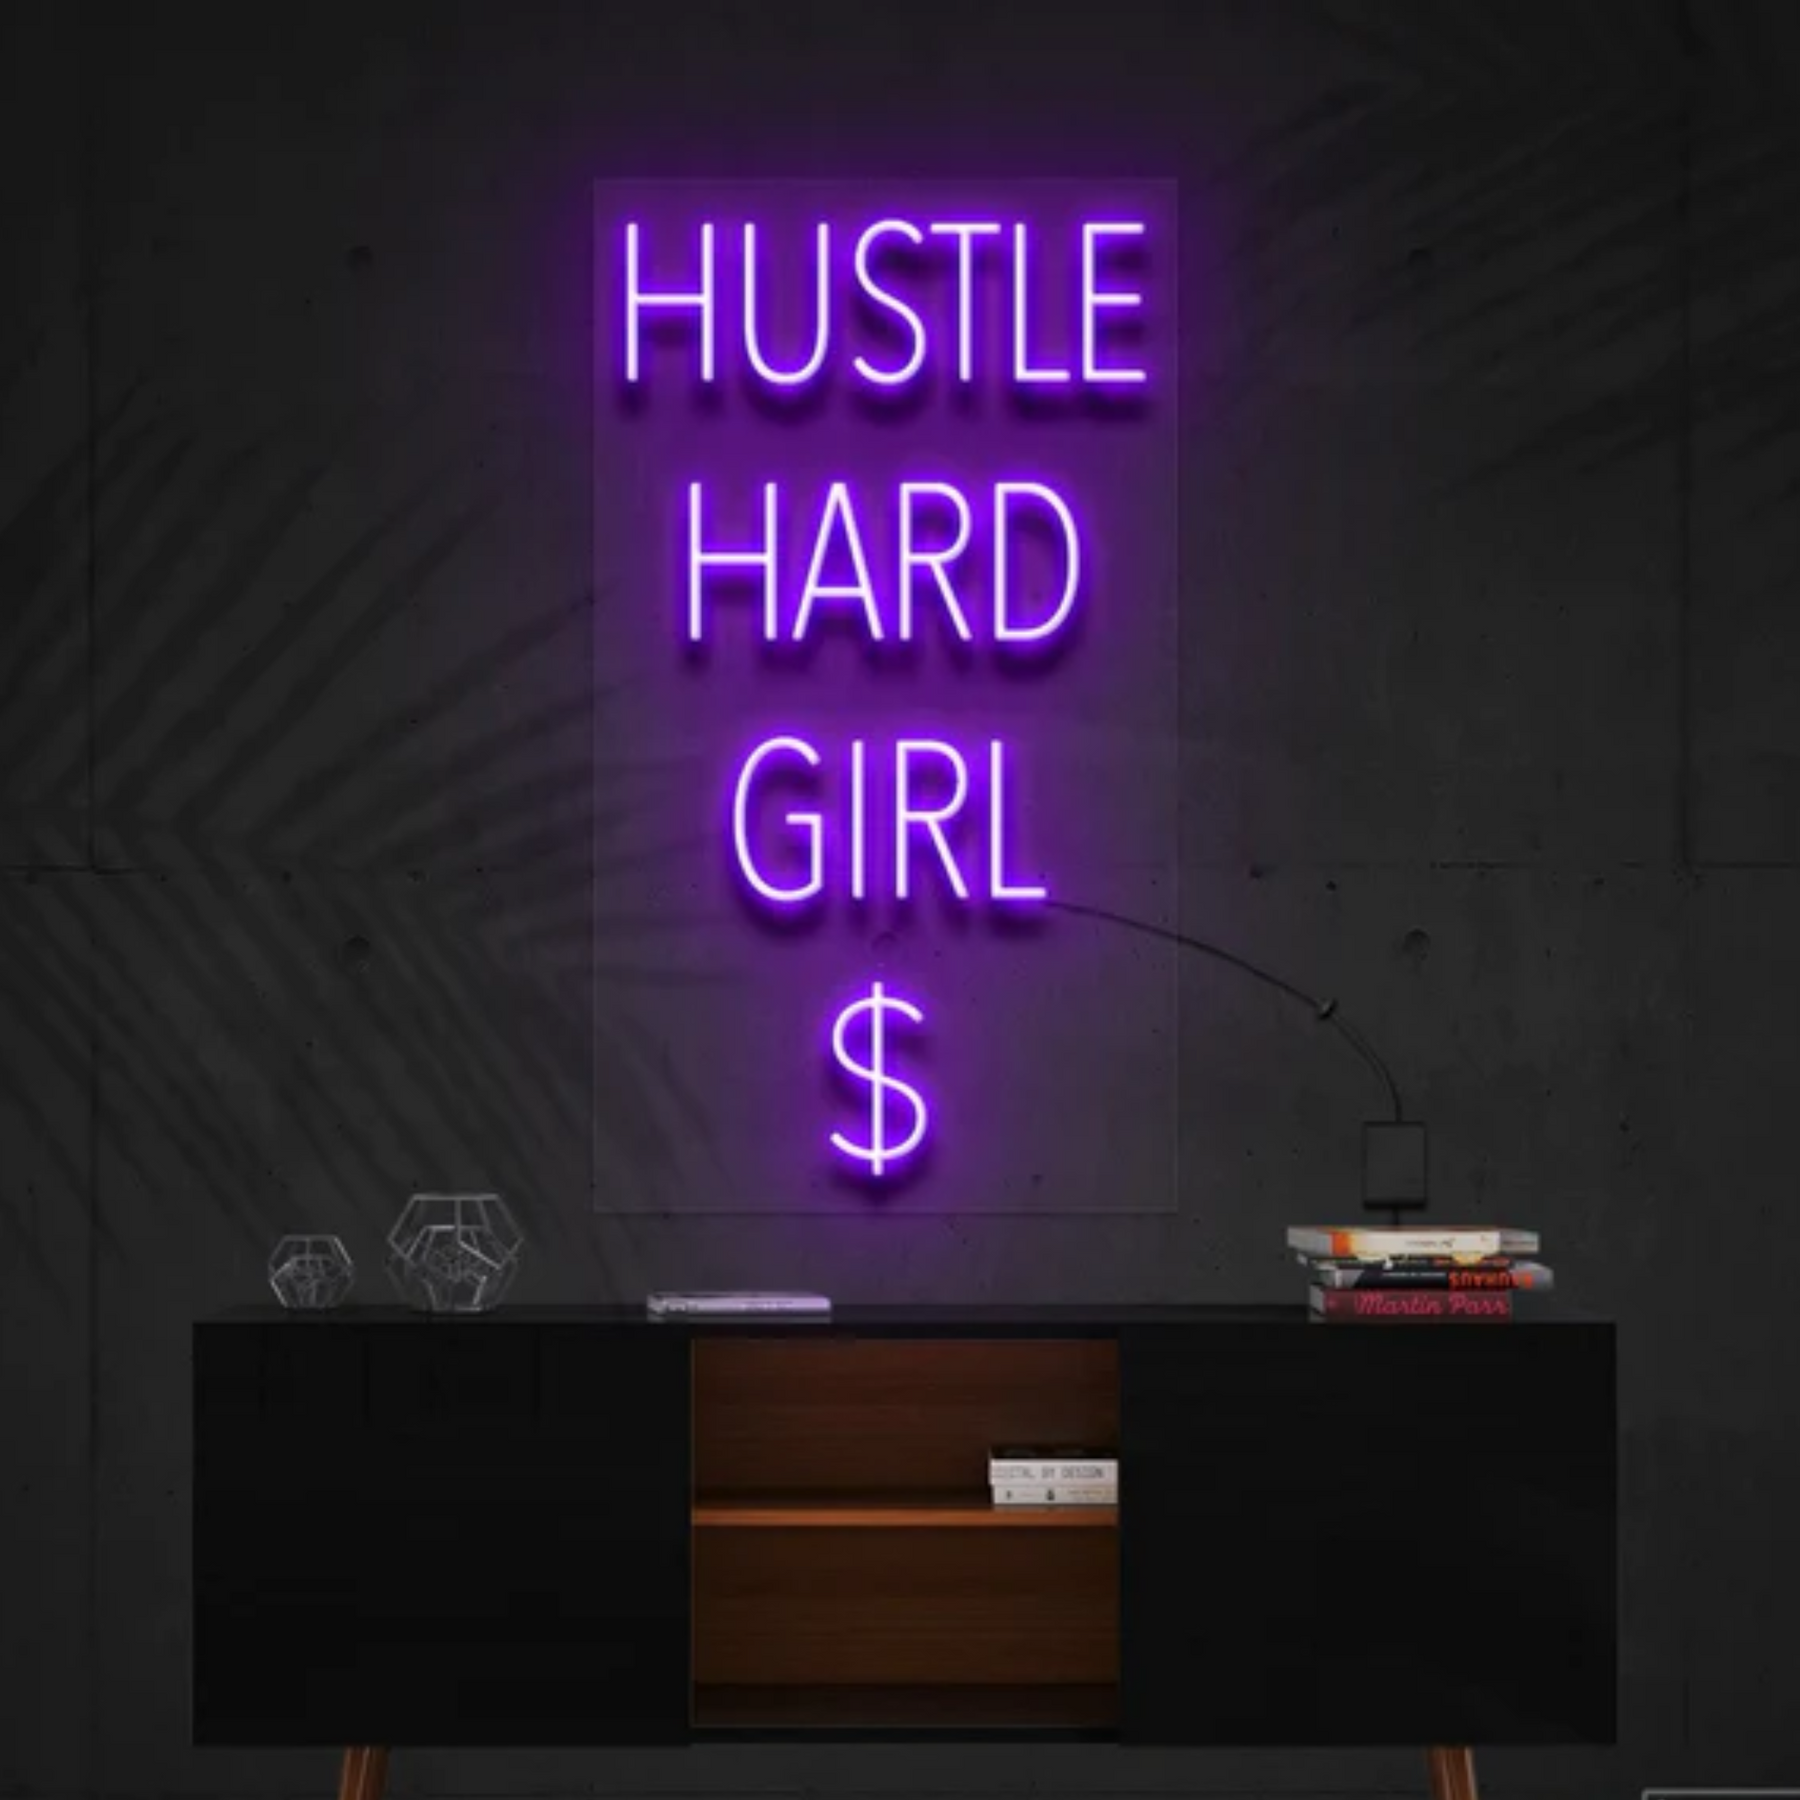 Hustle Hard Girl $